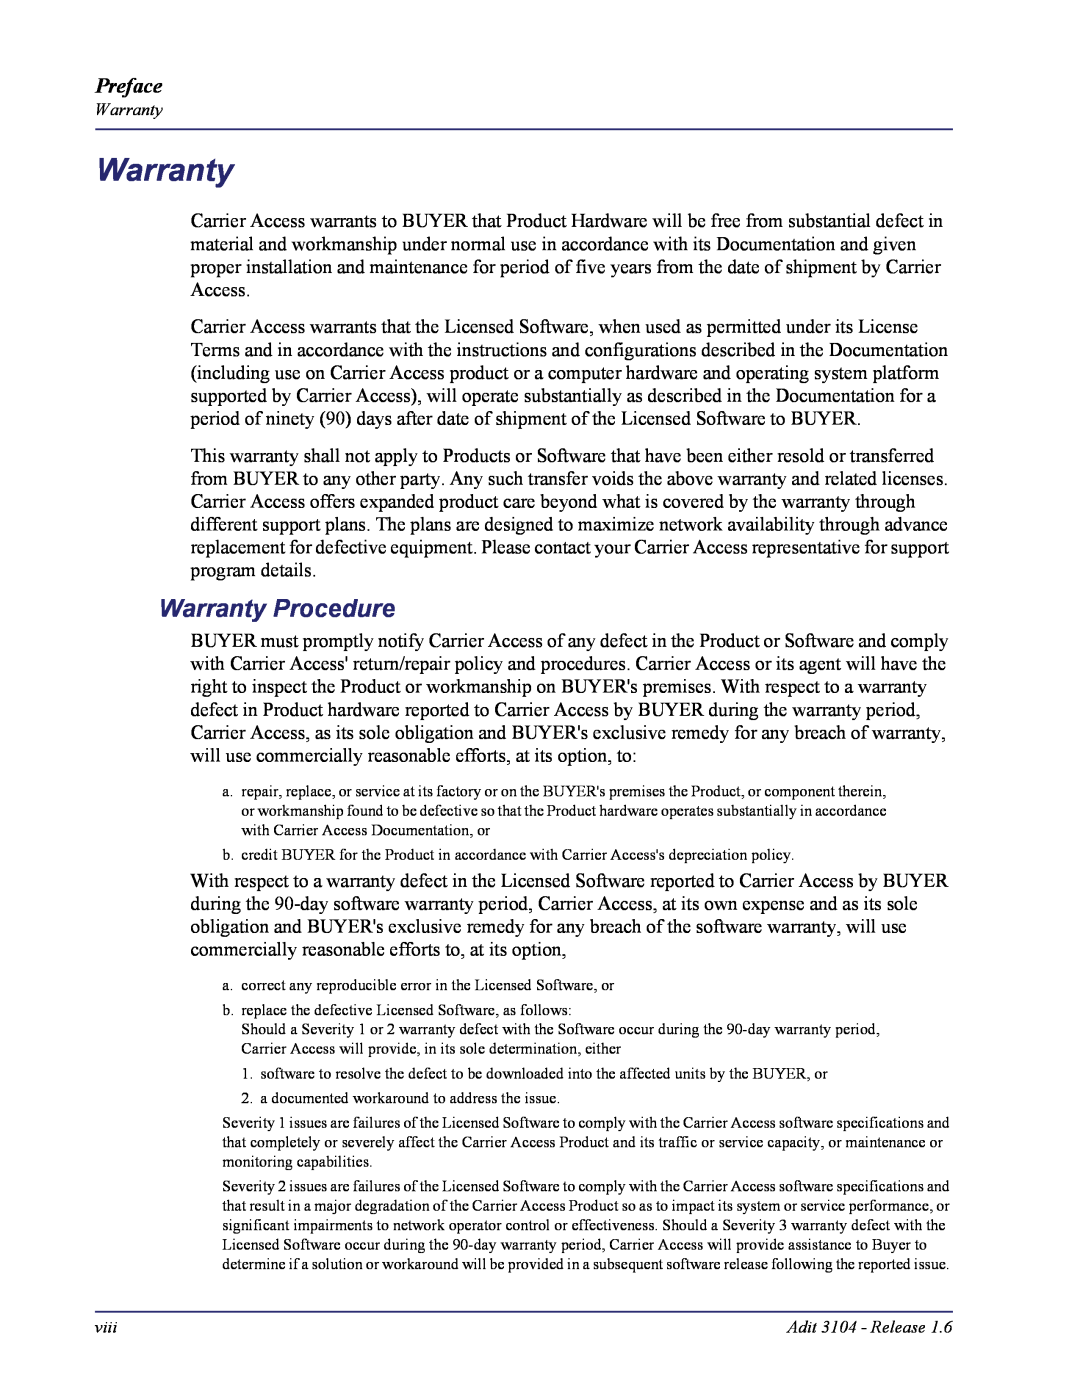 Carrier Access Adit 3104 user manual Warranty Procedure, Preface 